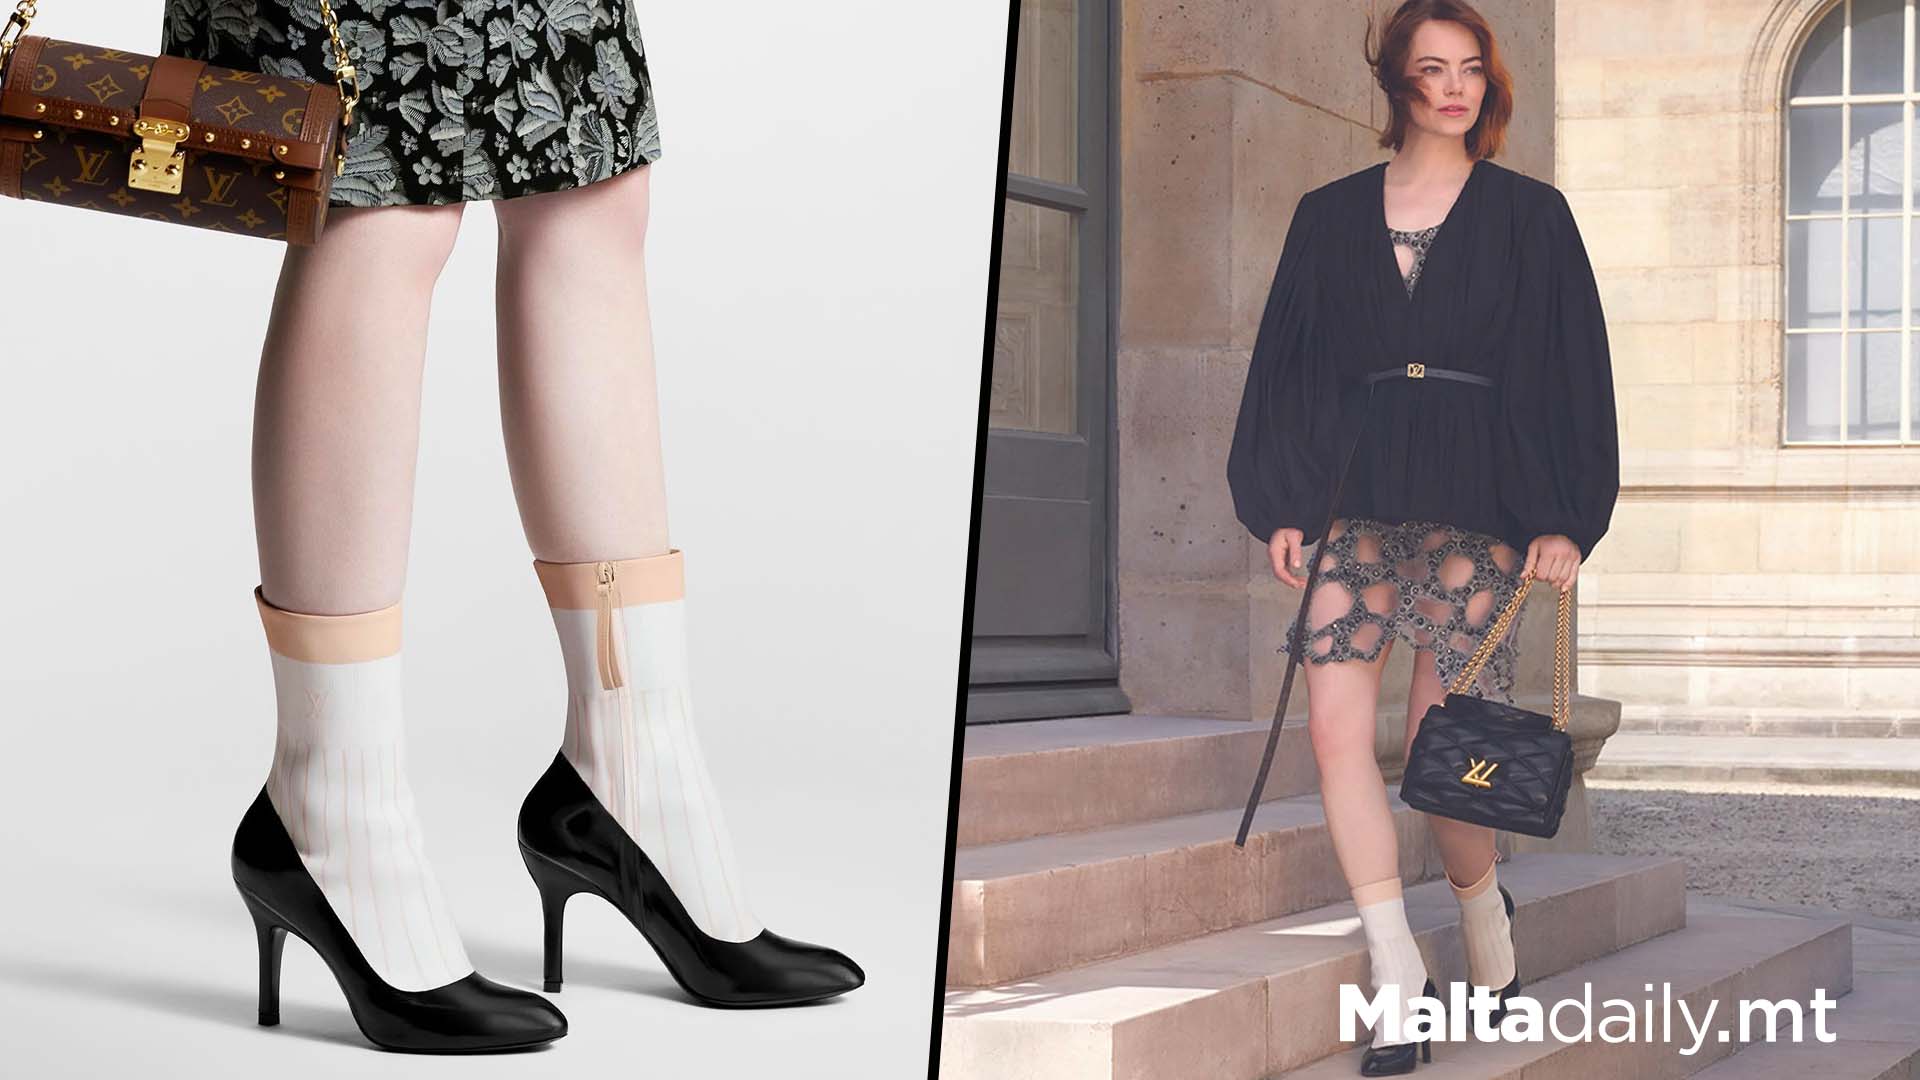 Louis Vuitton Release Heels Which Look Like Fake Legs